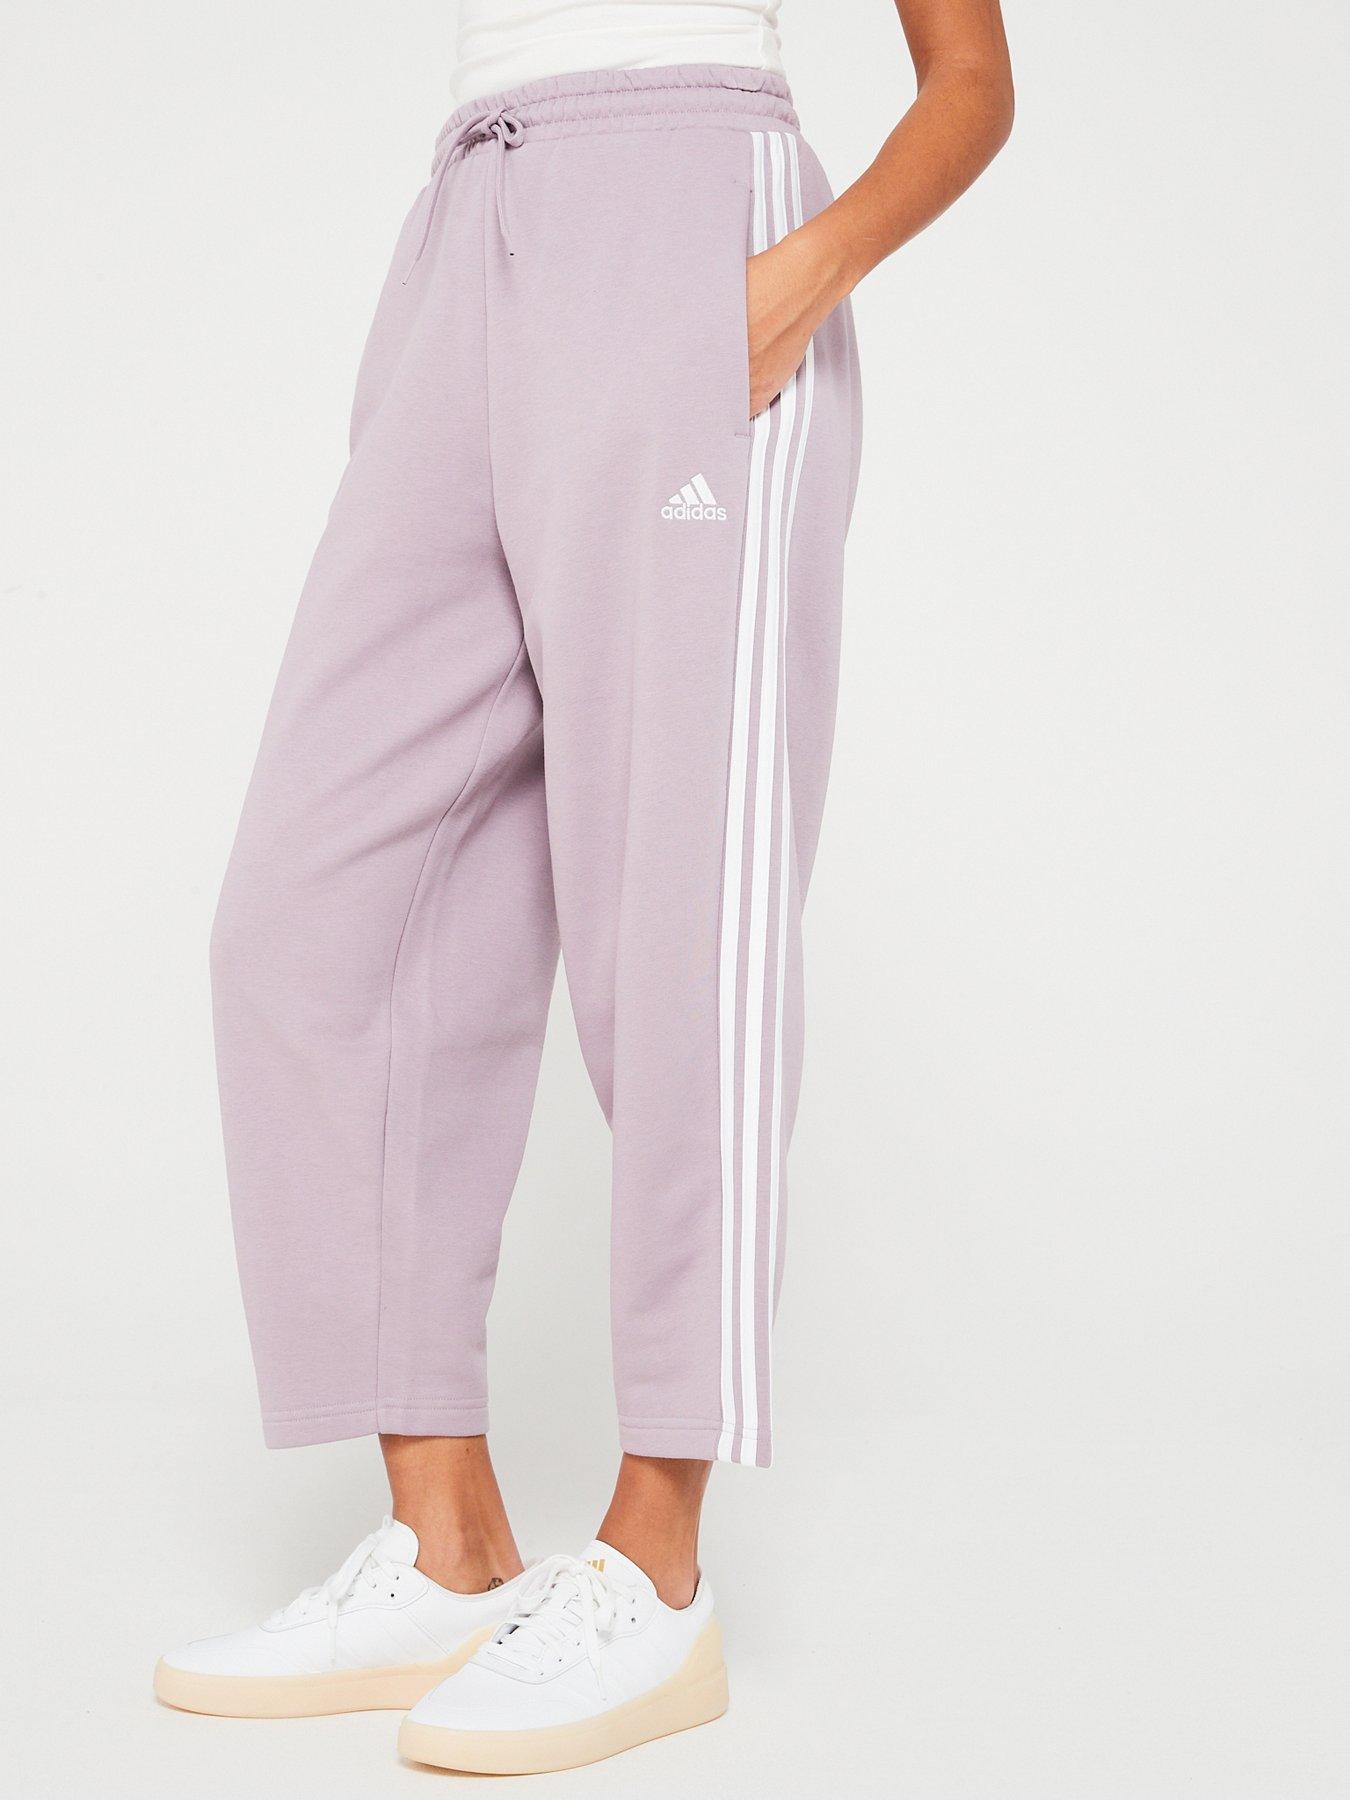 Beyond Yoga 100% Polyester Pink Yoga Pants Size XL - 53% off